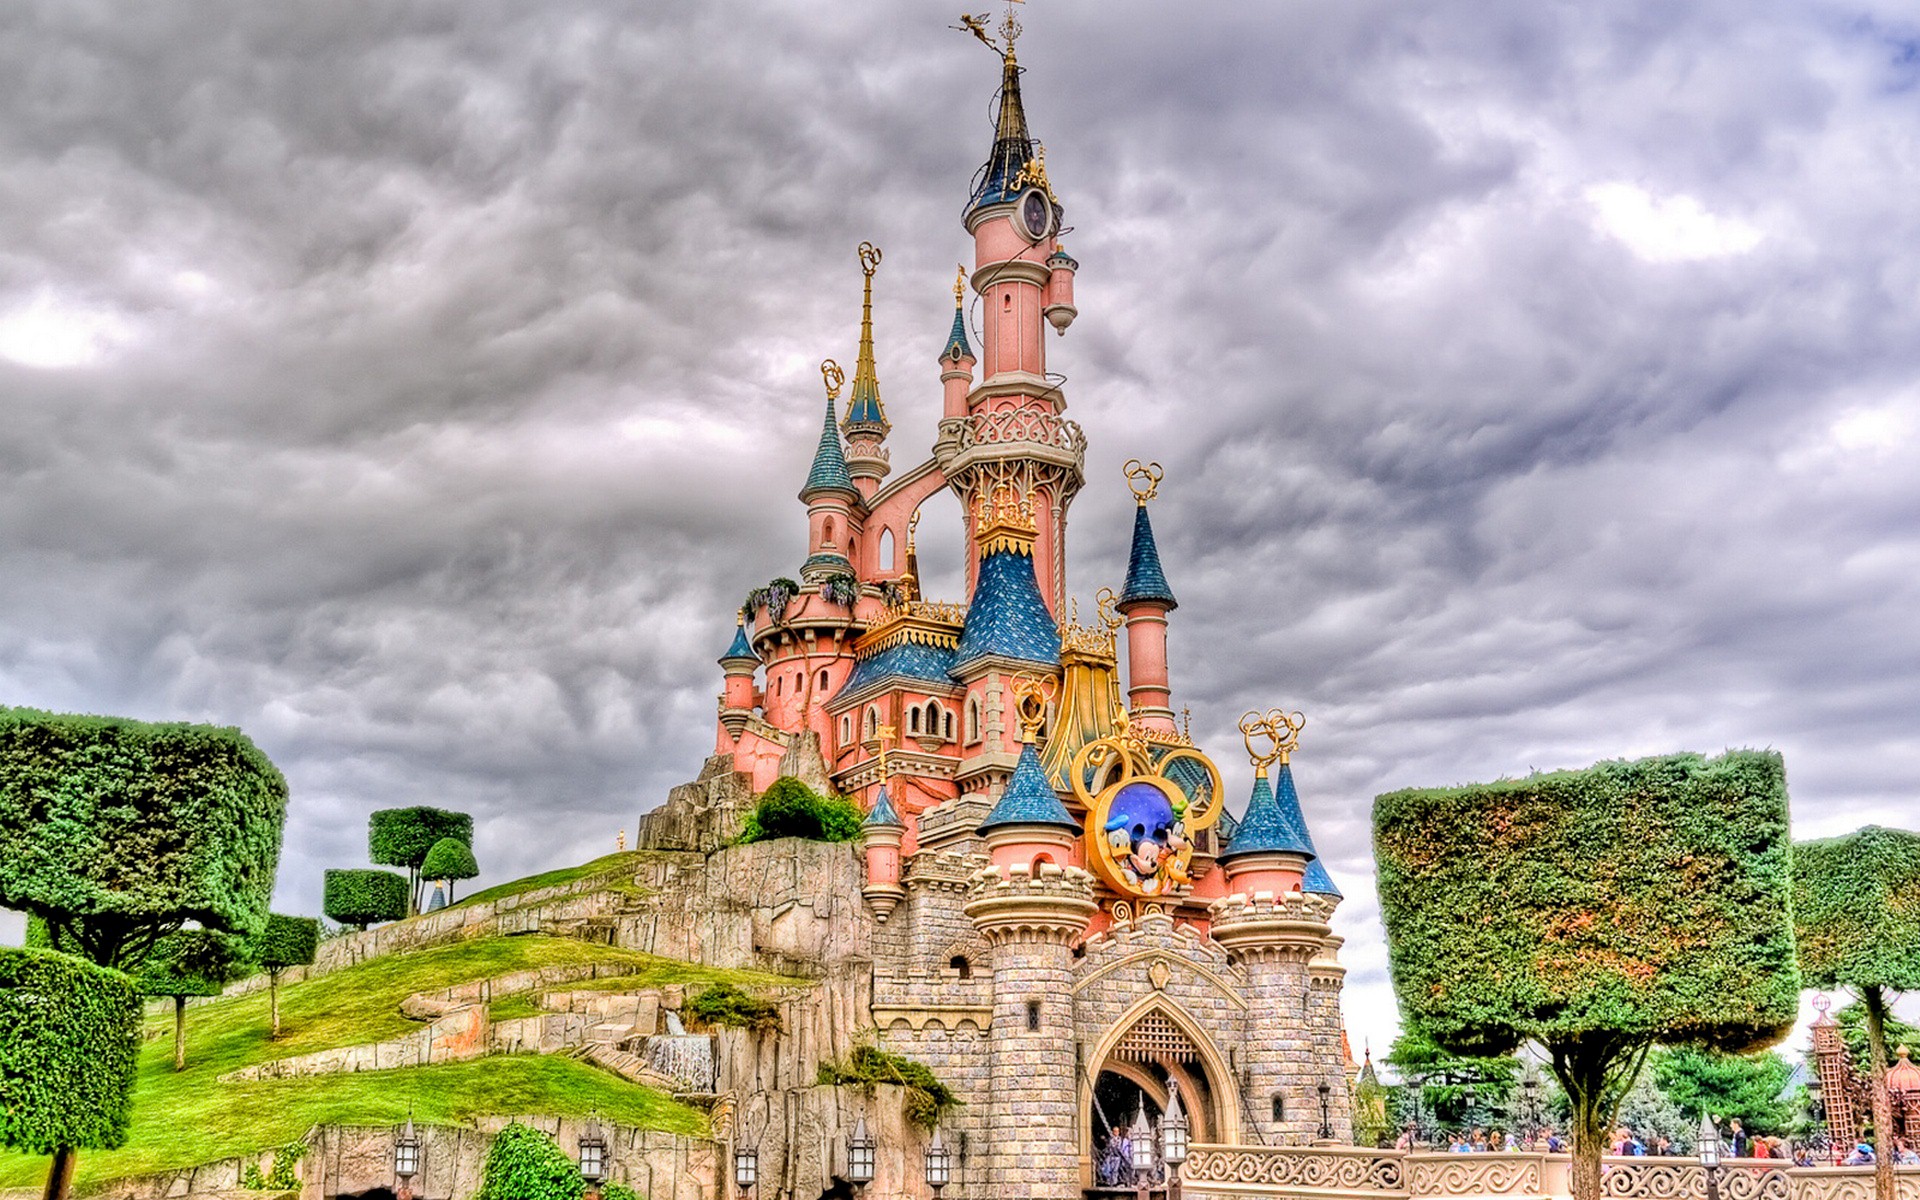 Sleeping Beauty Castle of Disneyland Park in Anaheim United States